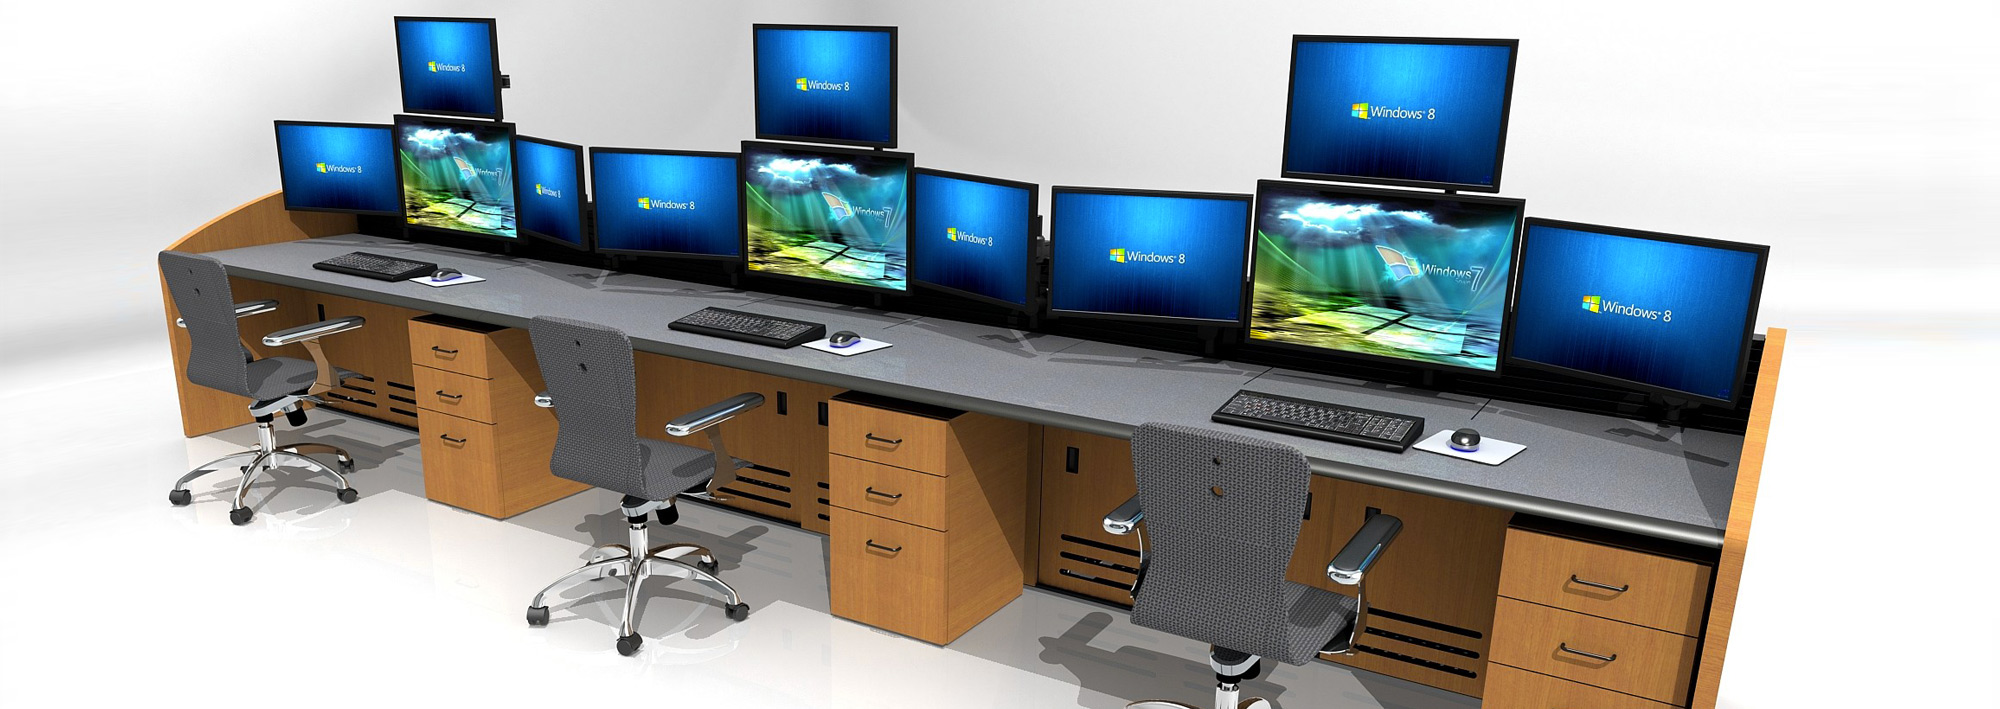 control room furniture | noc console design | critical